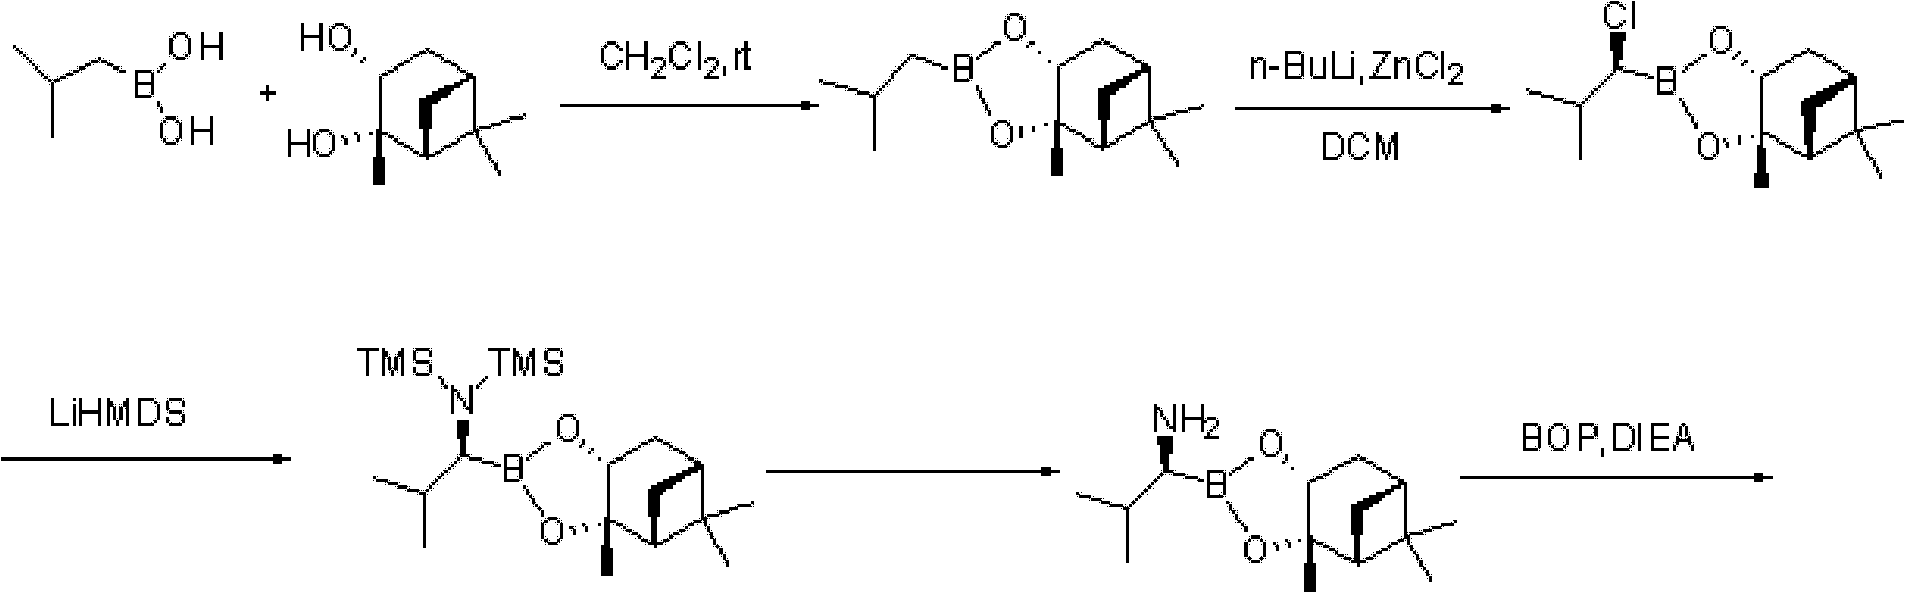 Method for preparing intermediate used for synthesizing bortezomib